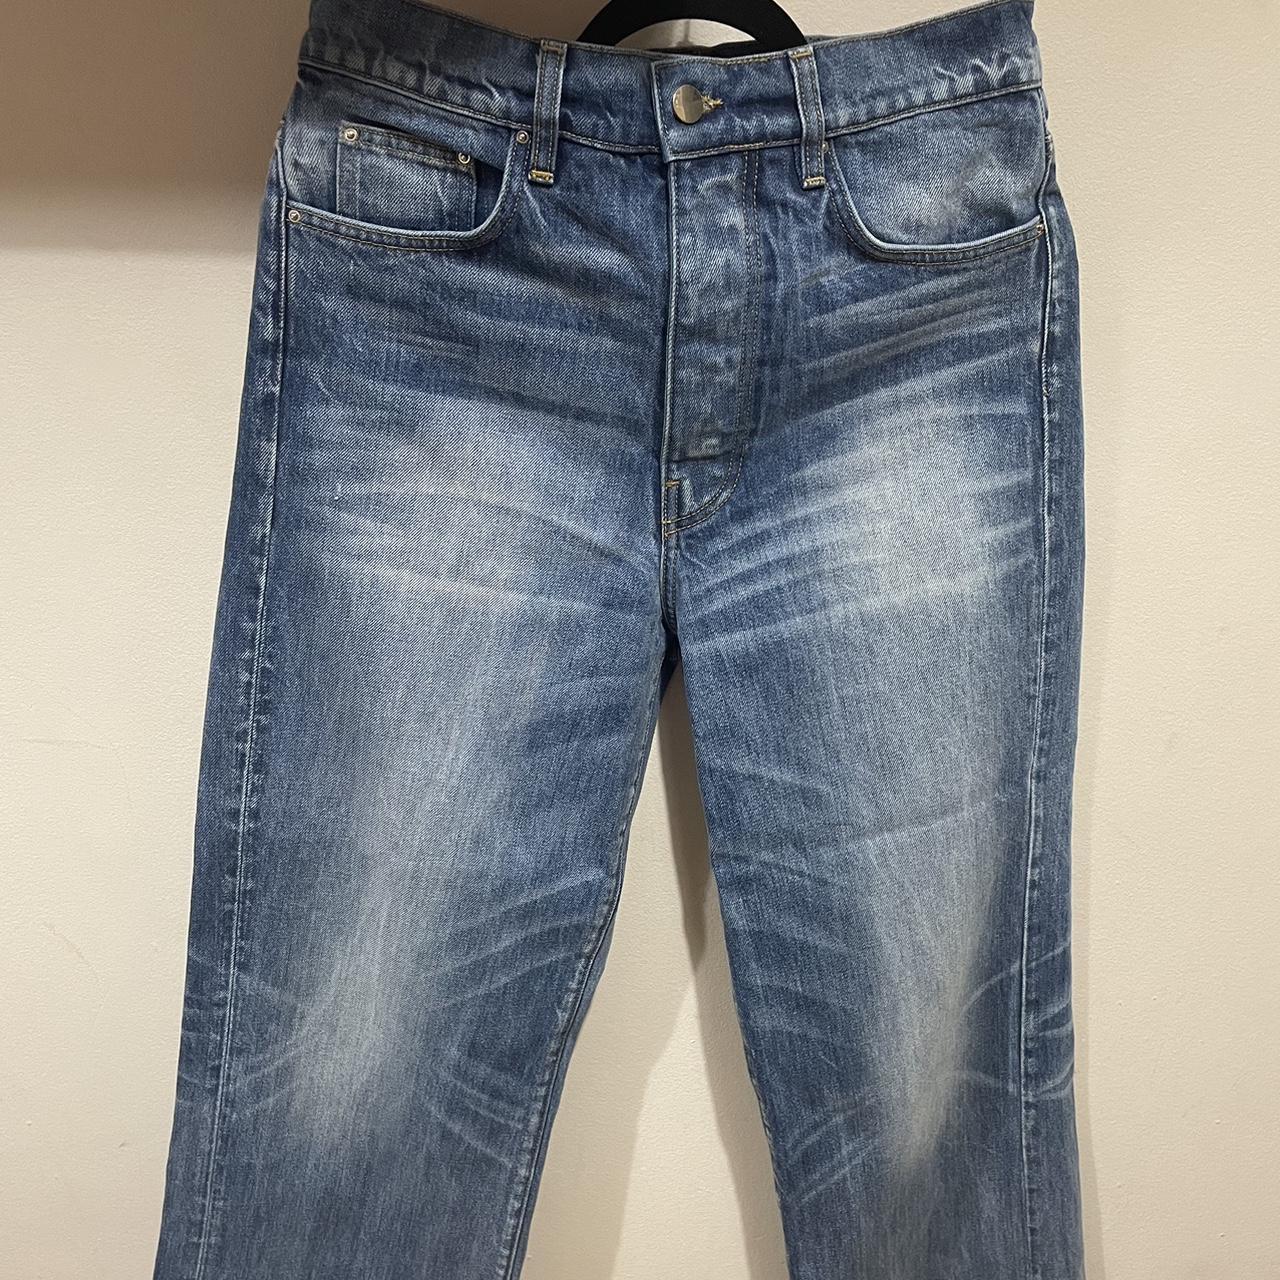 Amiri baggy denim Jeans - 30” Waist Bought from... - Depop